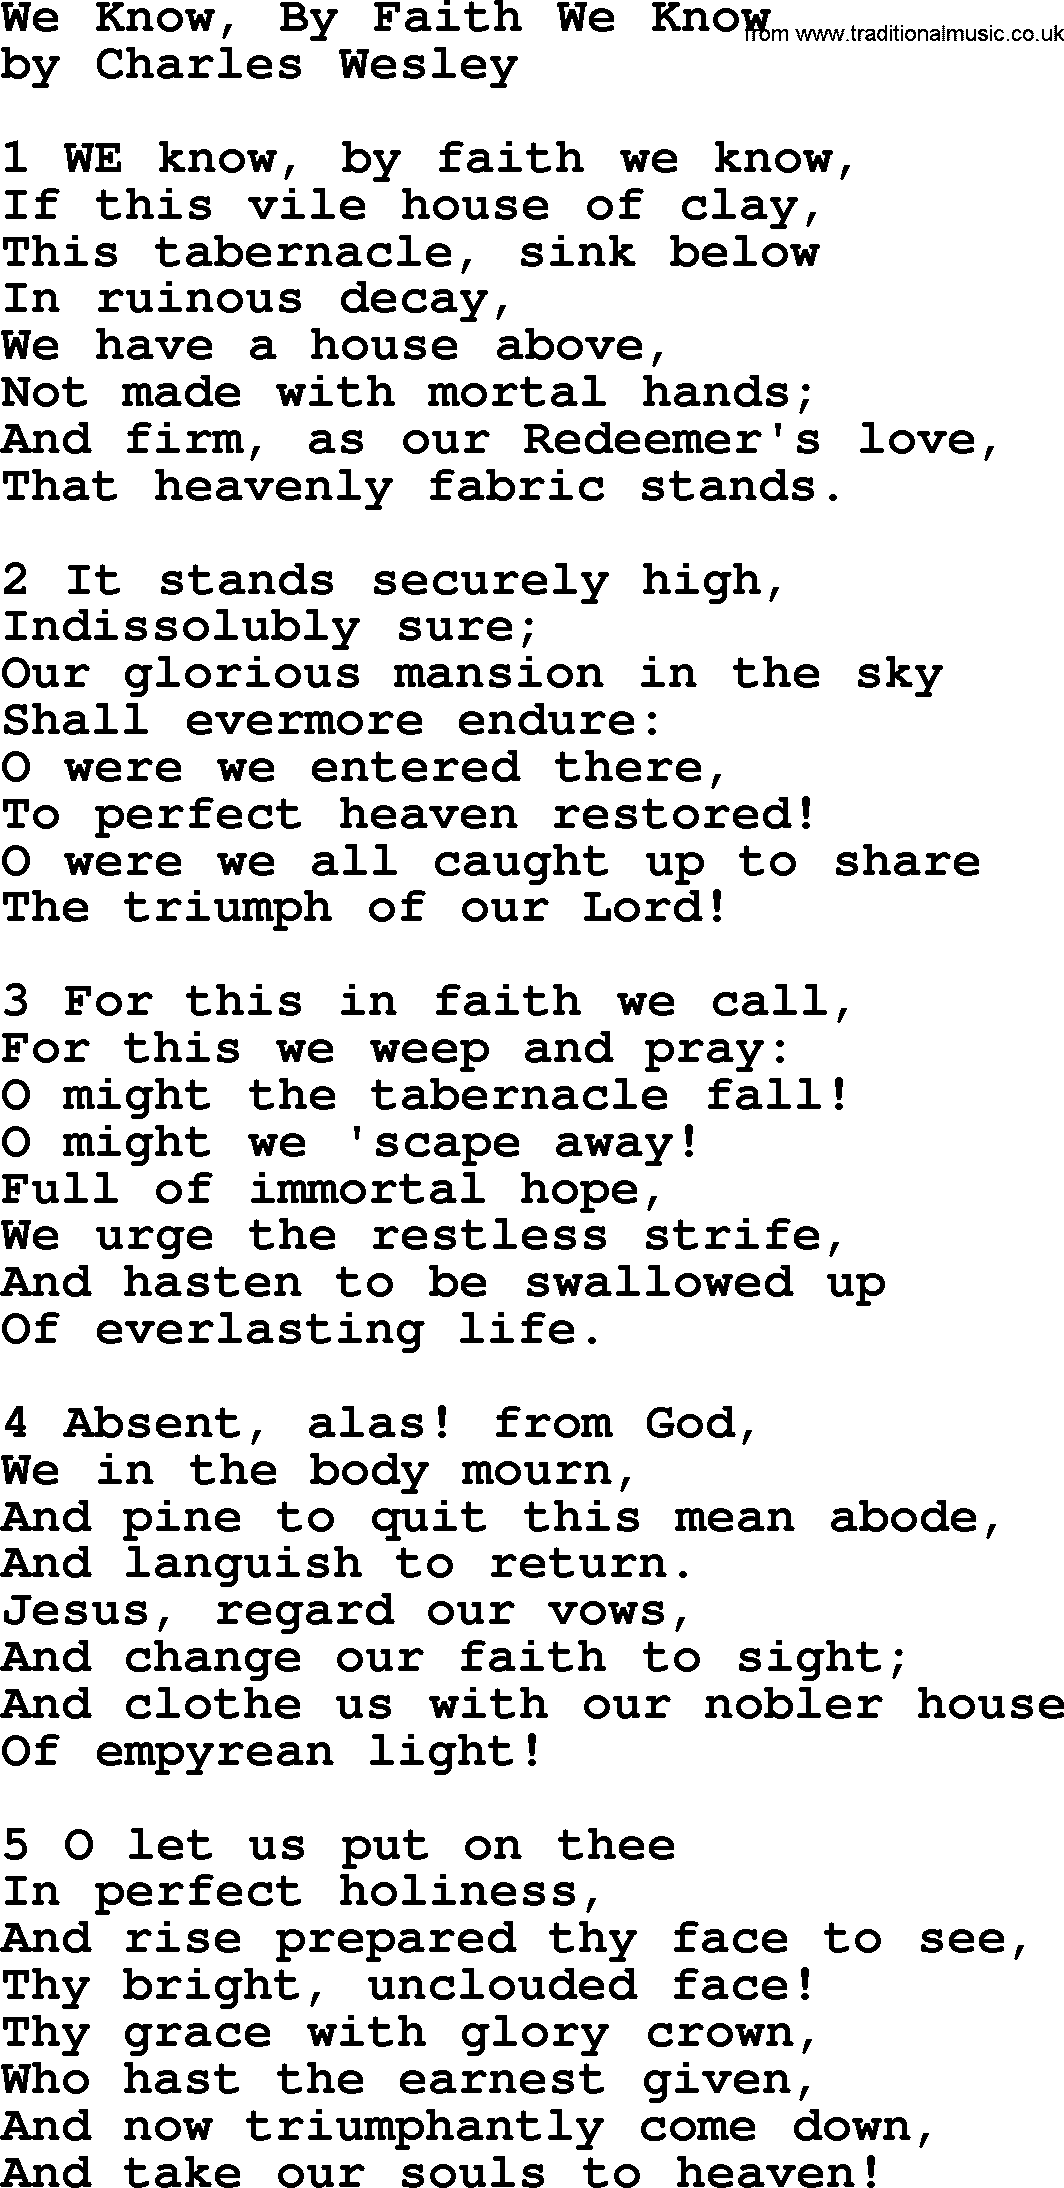 Charles Wesley hymn: We Know, By Faith We Know, lyrics